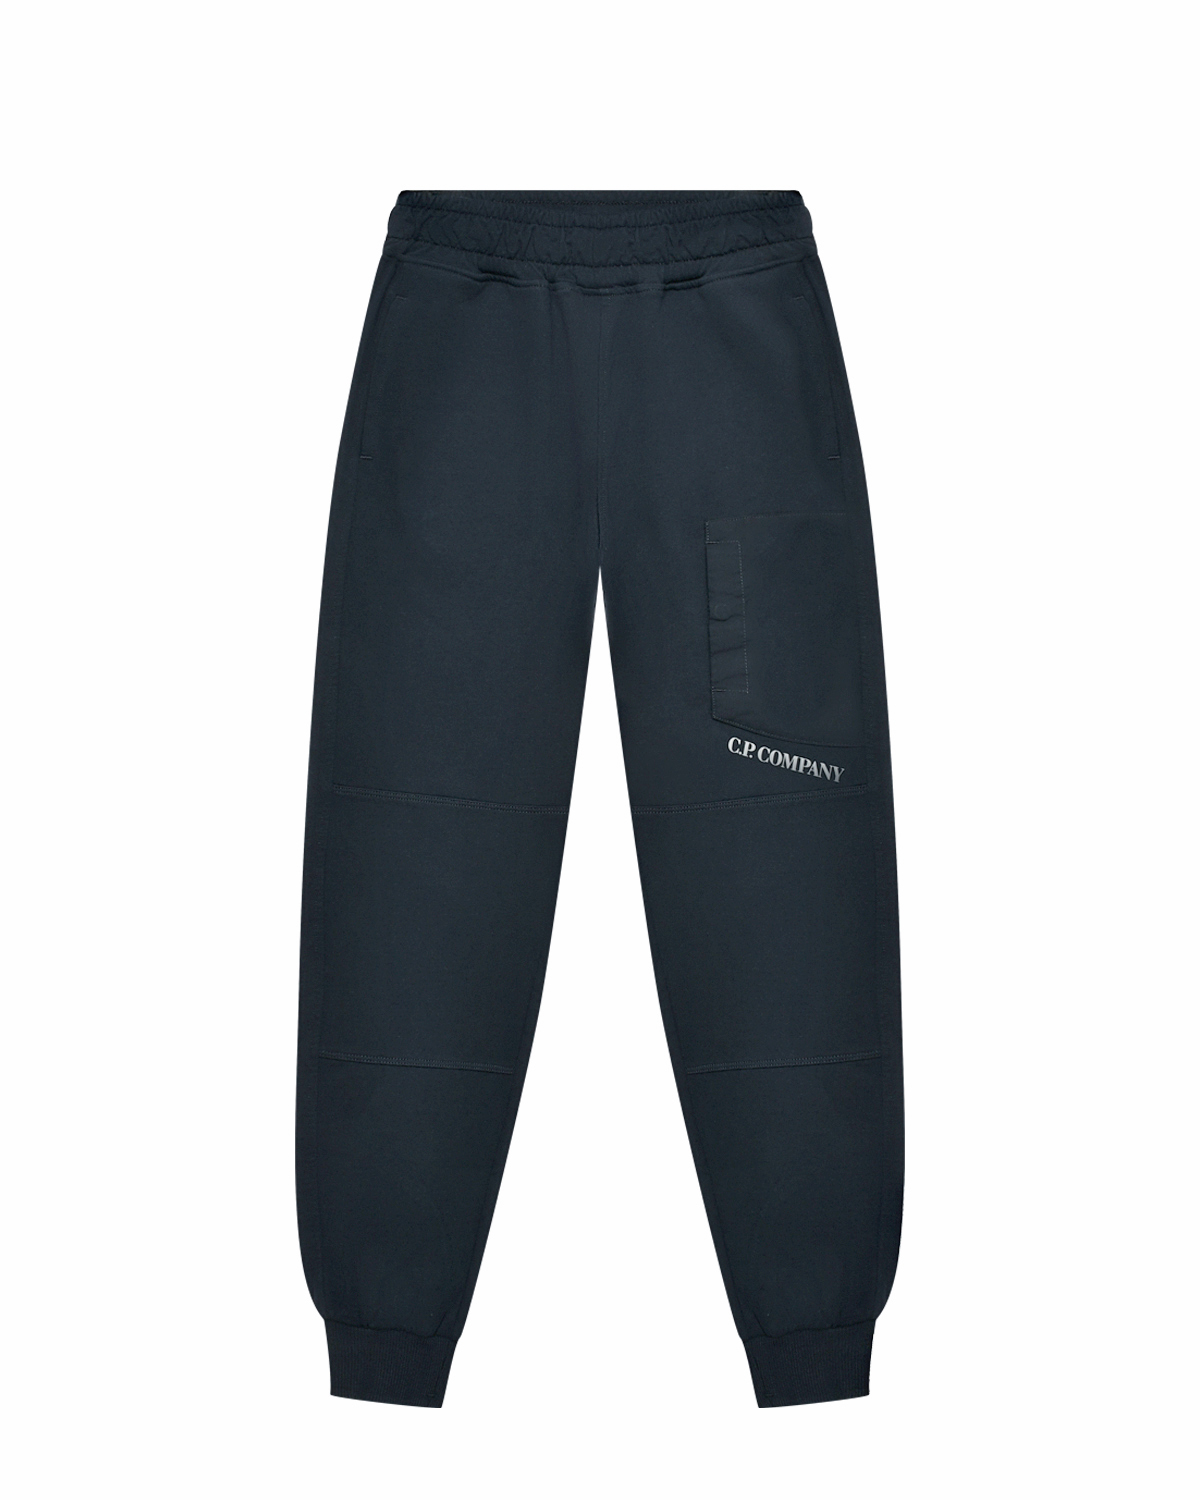 Спортивные брюки темно-синего цвета CP Company, размер 128 - фото 1